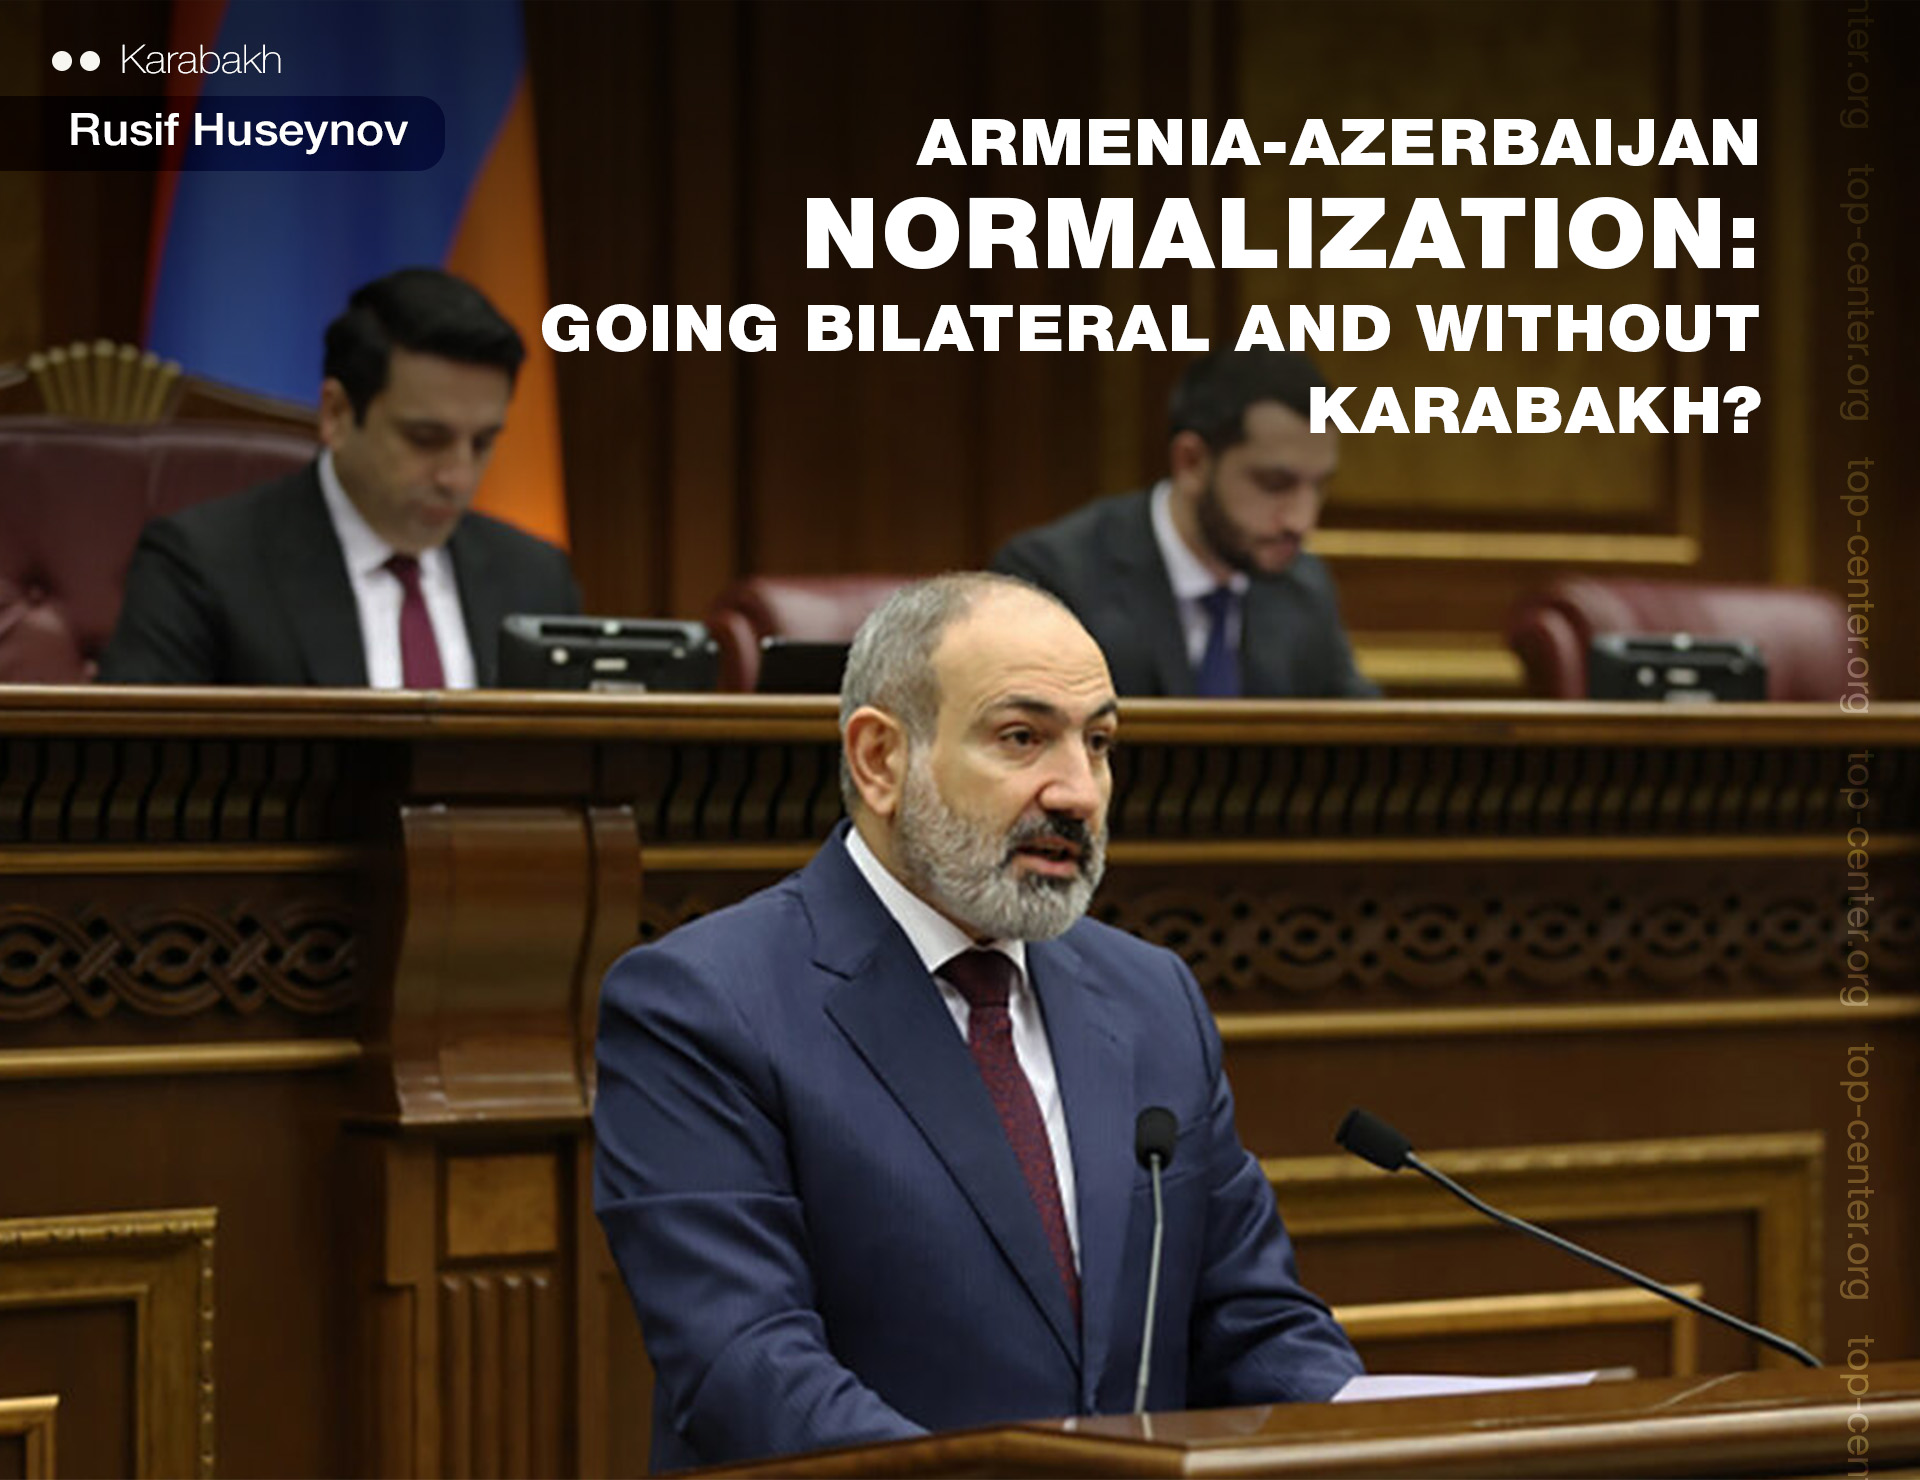 Armenia-Azerbaijan normalization: going bilateral and without Karabakh?